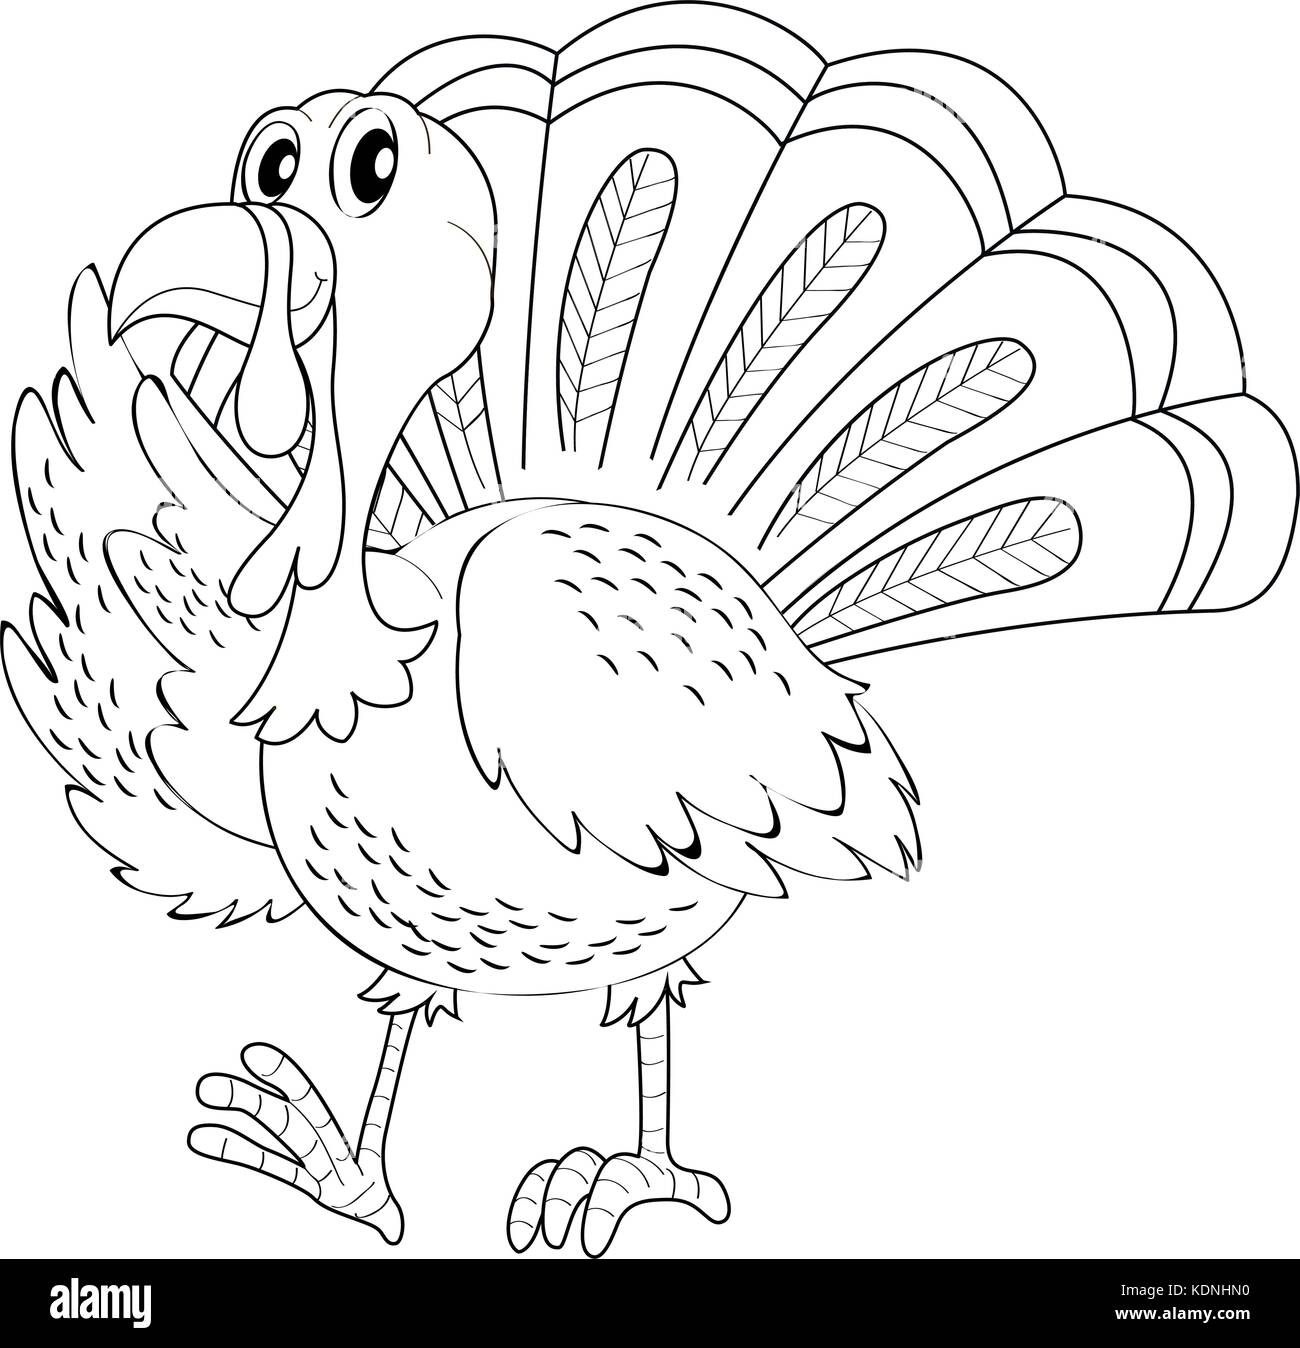 Doodle animal for turkey illustration Stock Vector Image & Art - Alamy